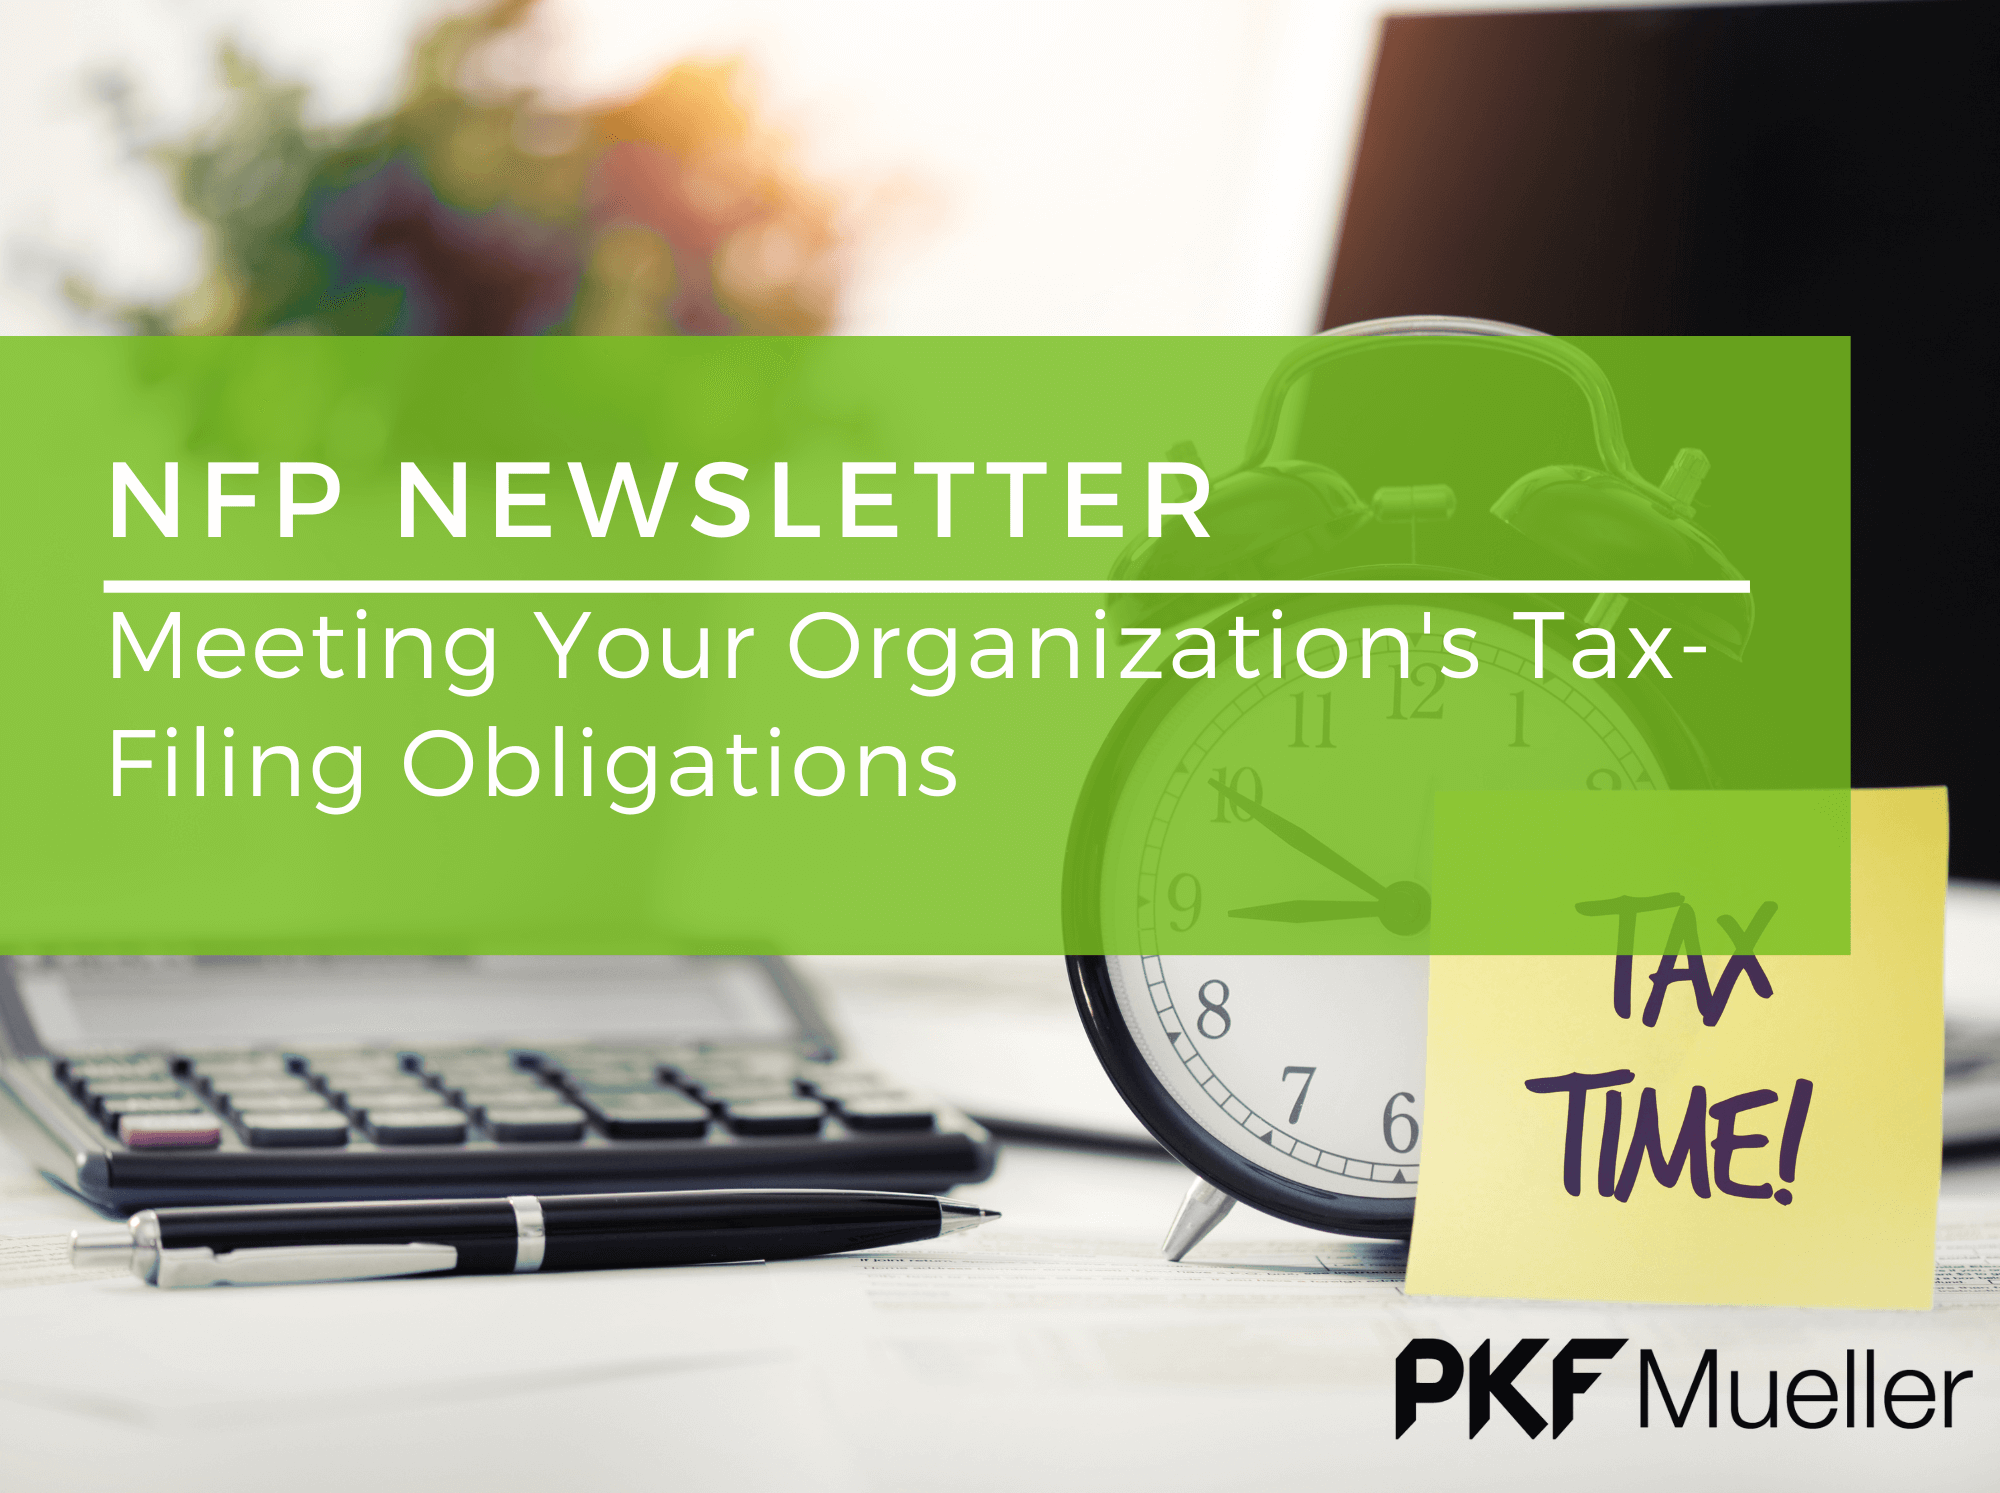 meeting-your-organization-s-tax-filing-obligations-pkf-mueller